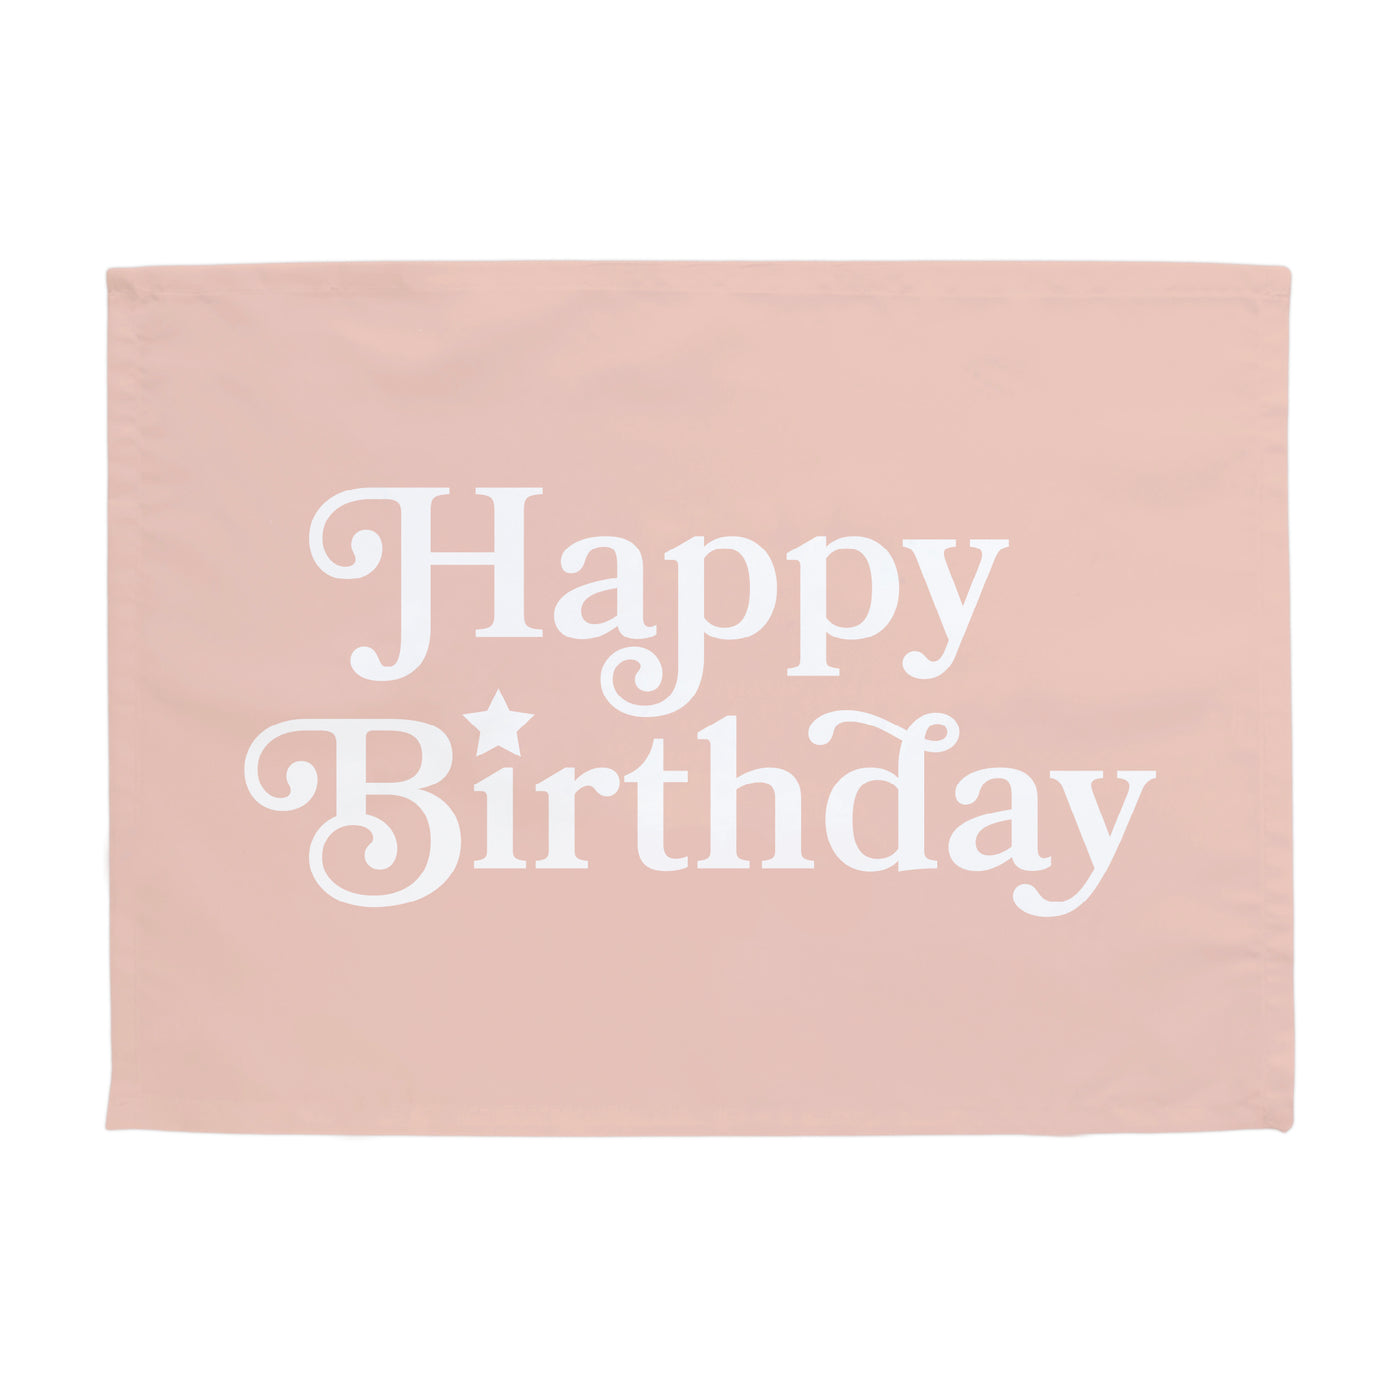 Happy Birthday {Pink & White} Banner